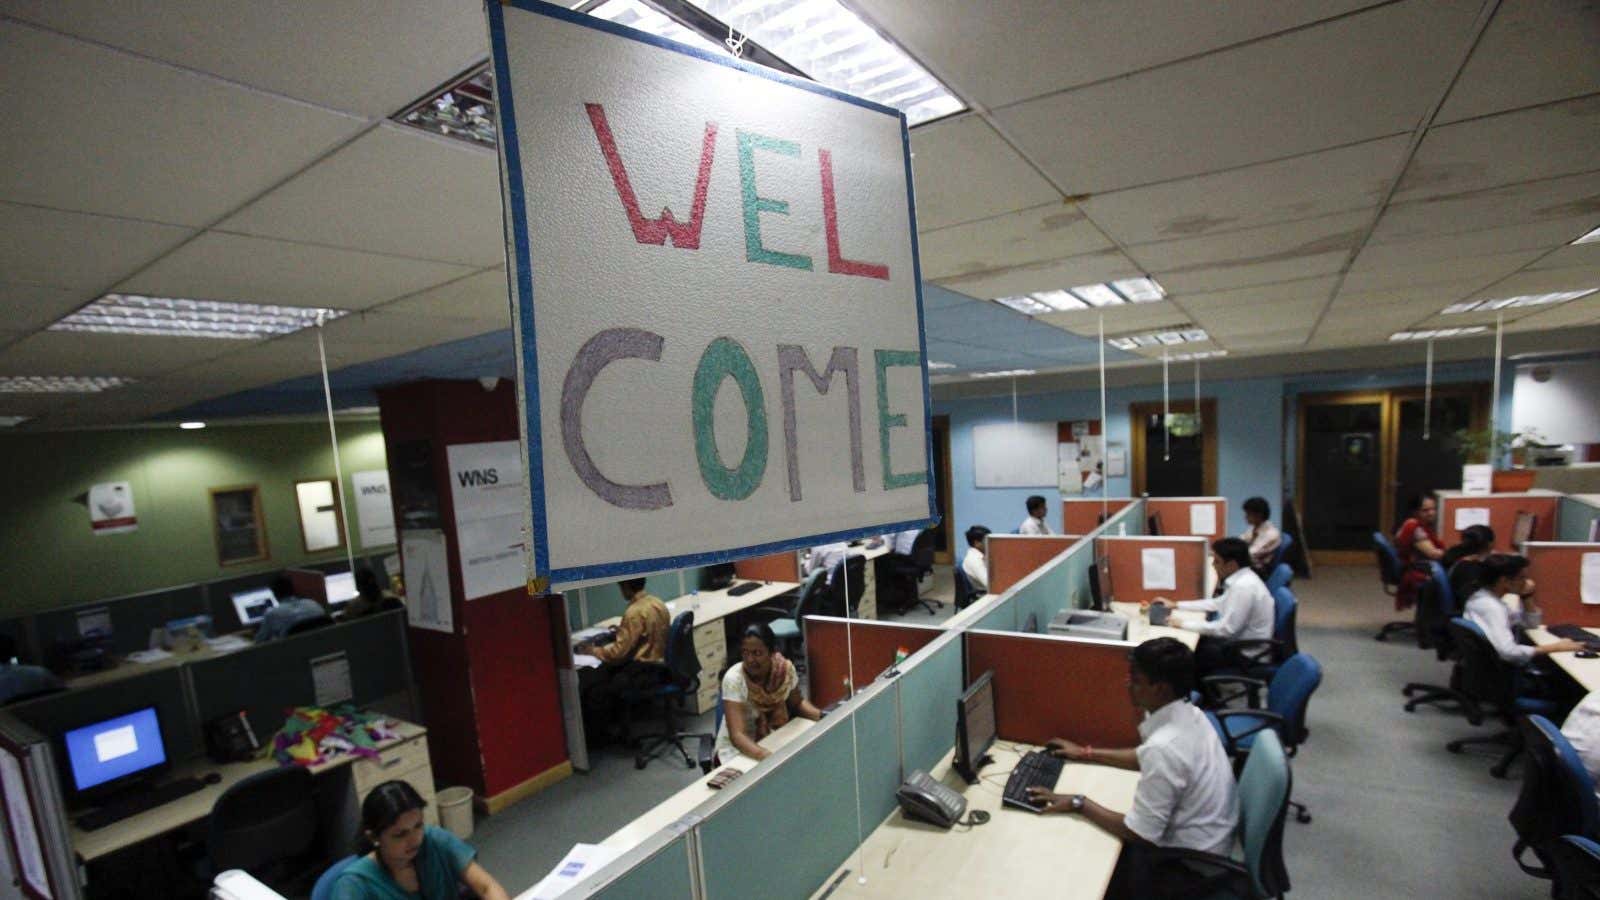 Making employees feel welcome.